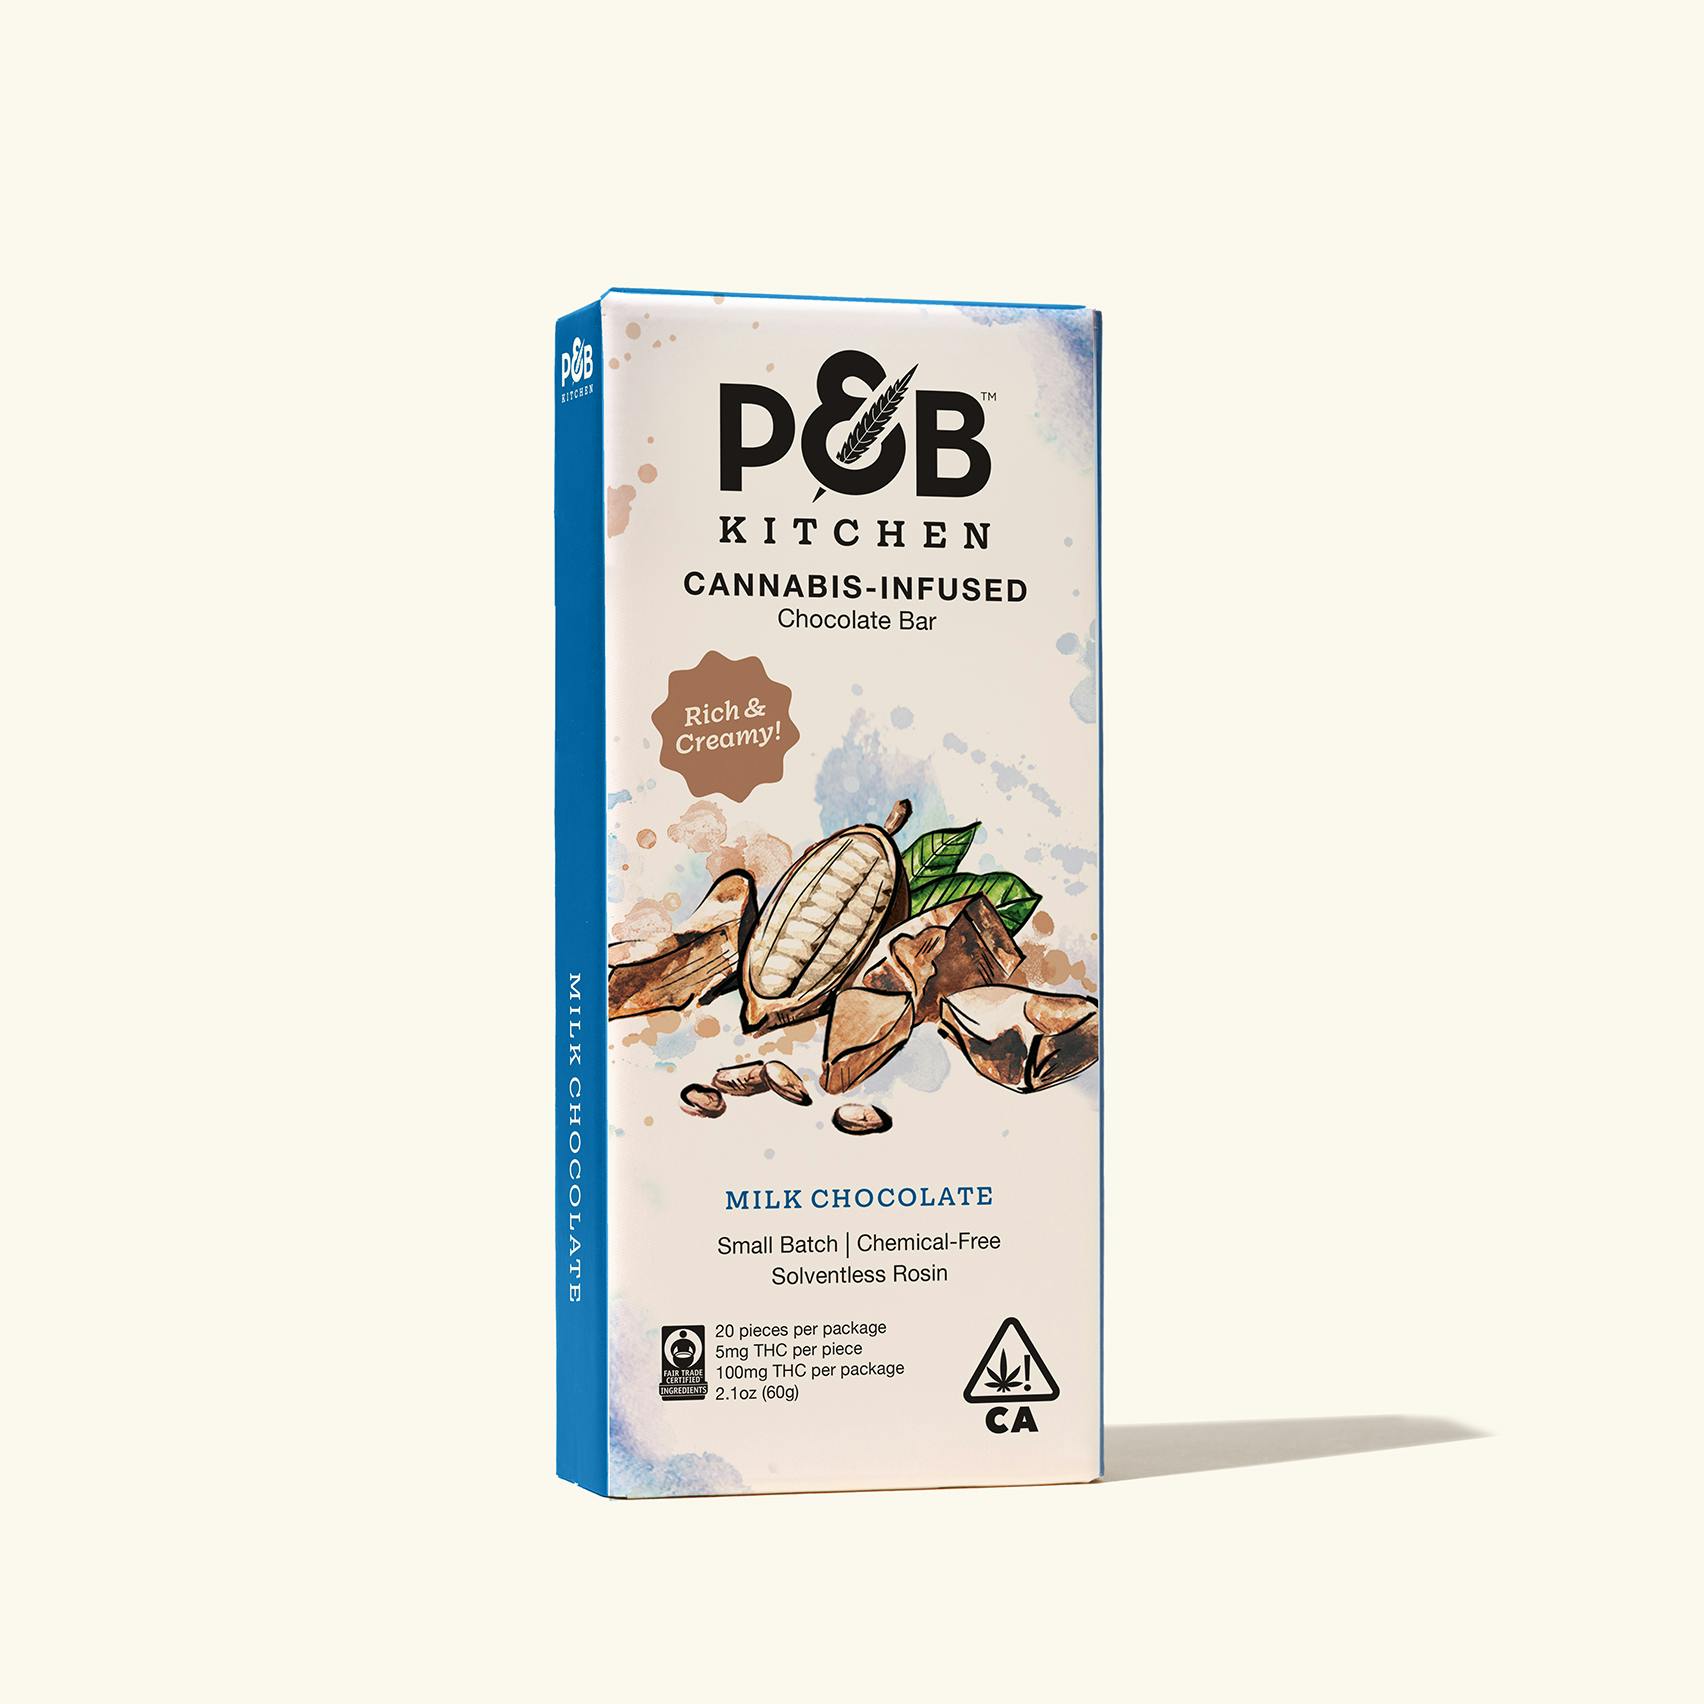 PB Kitchen Milk Chocolate Bar Box Product Image PDP Main Gallery Cream 01